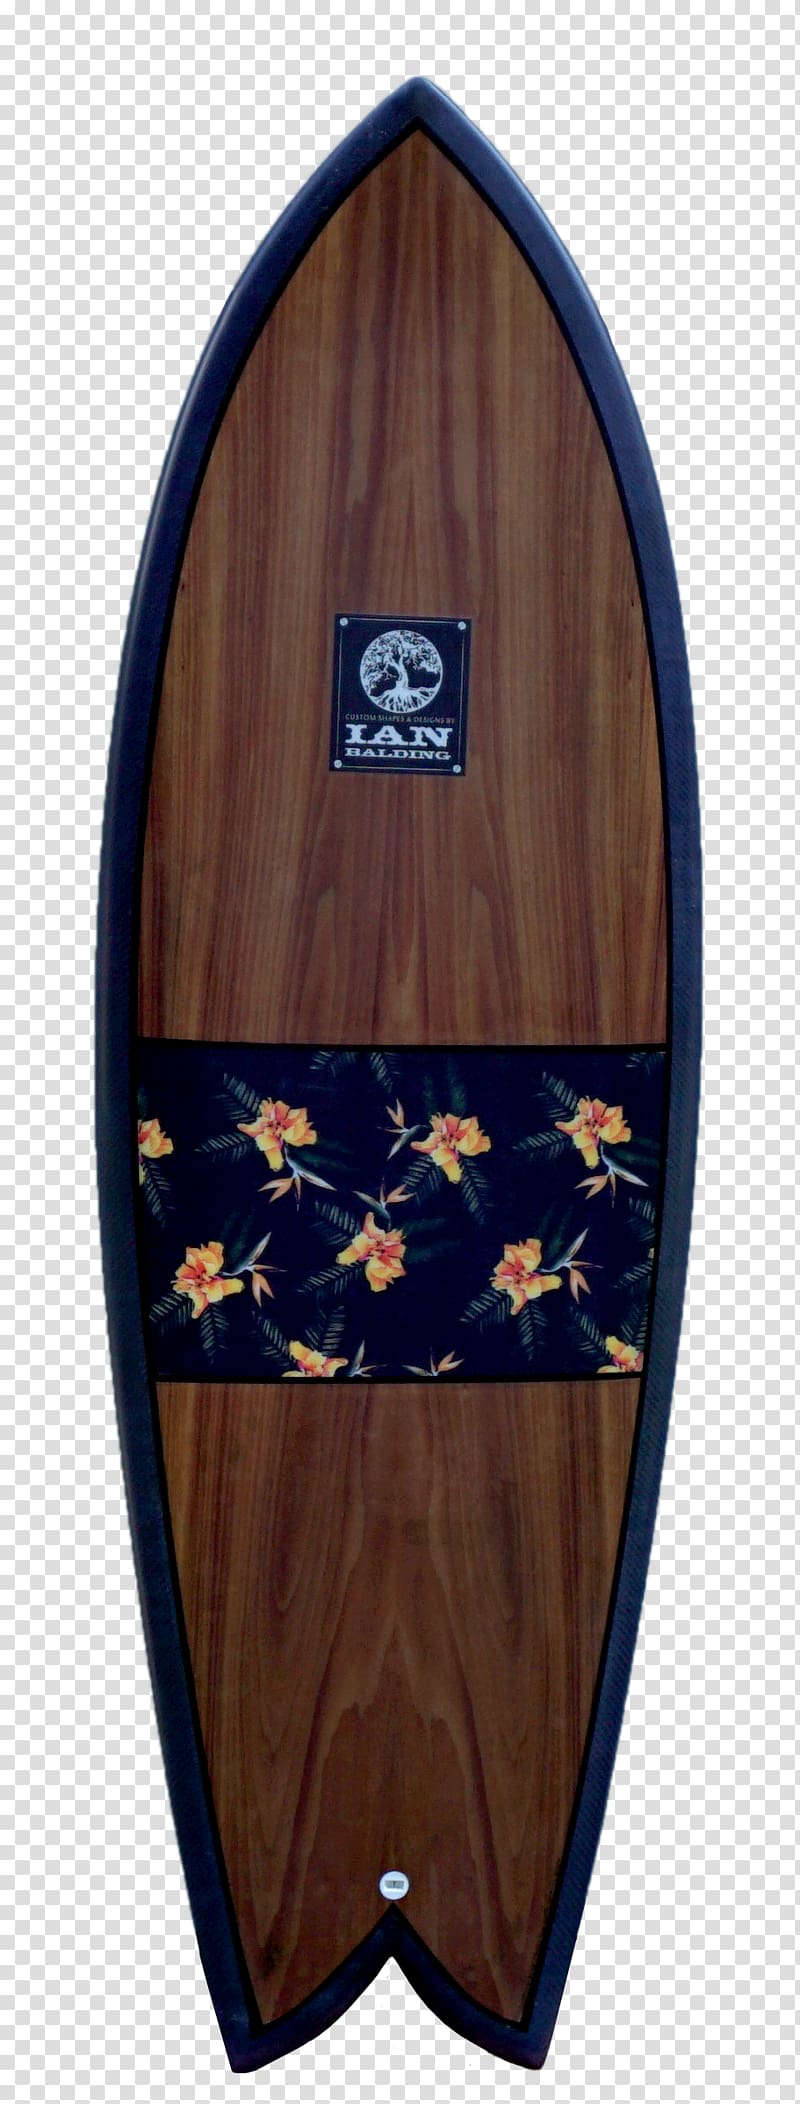 Surfboard Fins Longboard Shortboard Standup paddleboarding, surf board transparent background PNG clipart